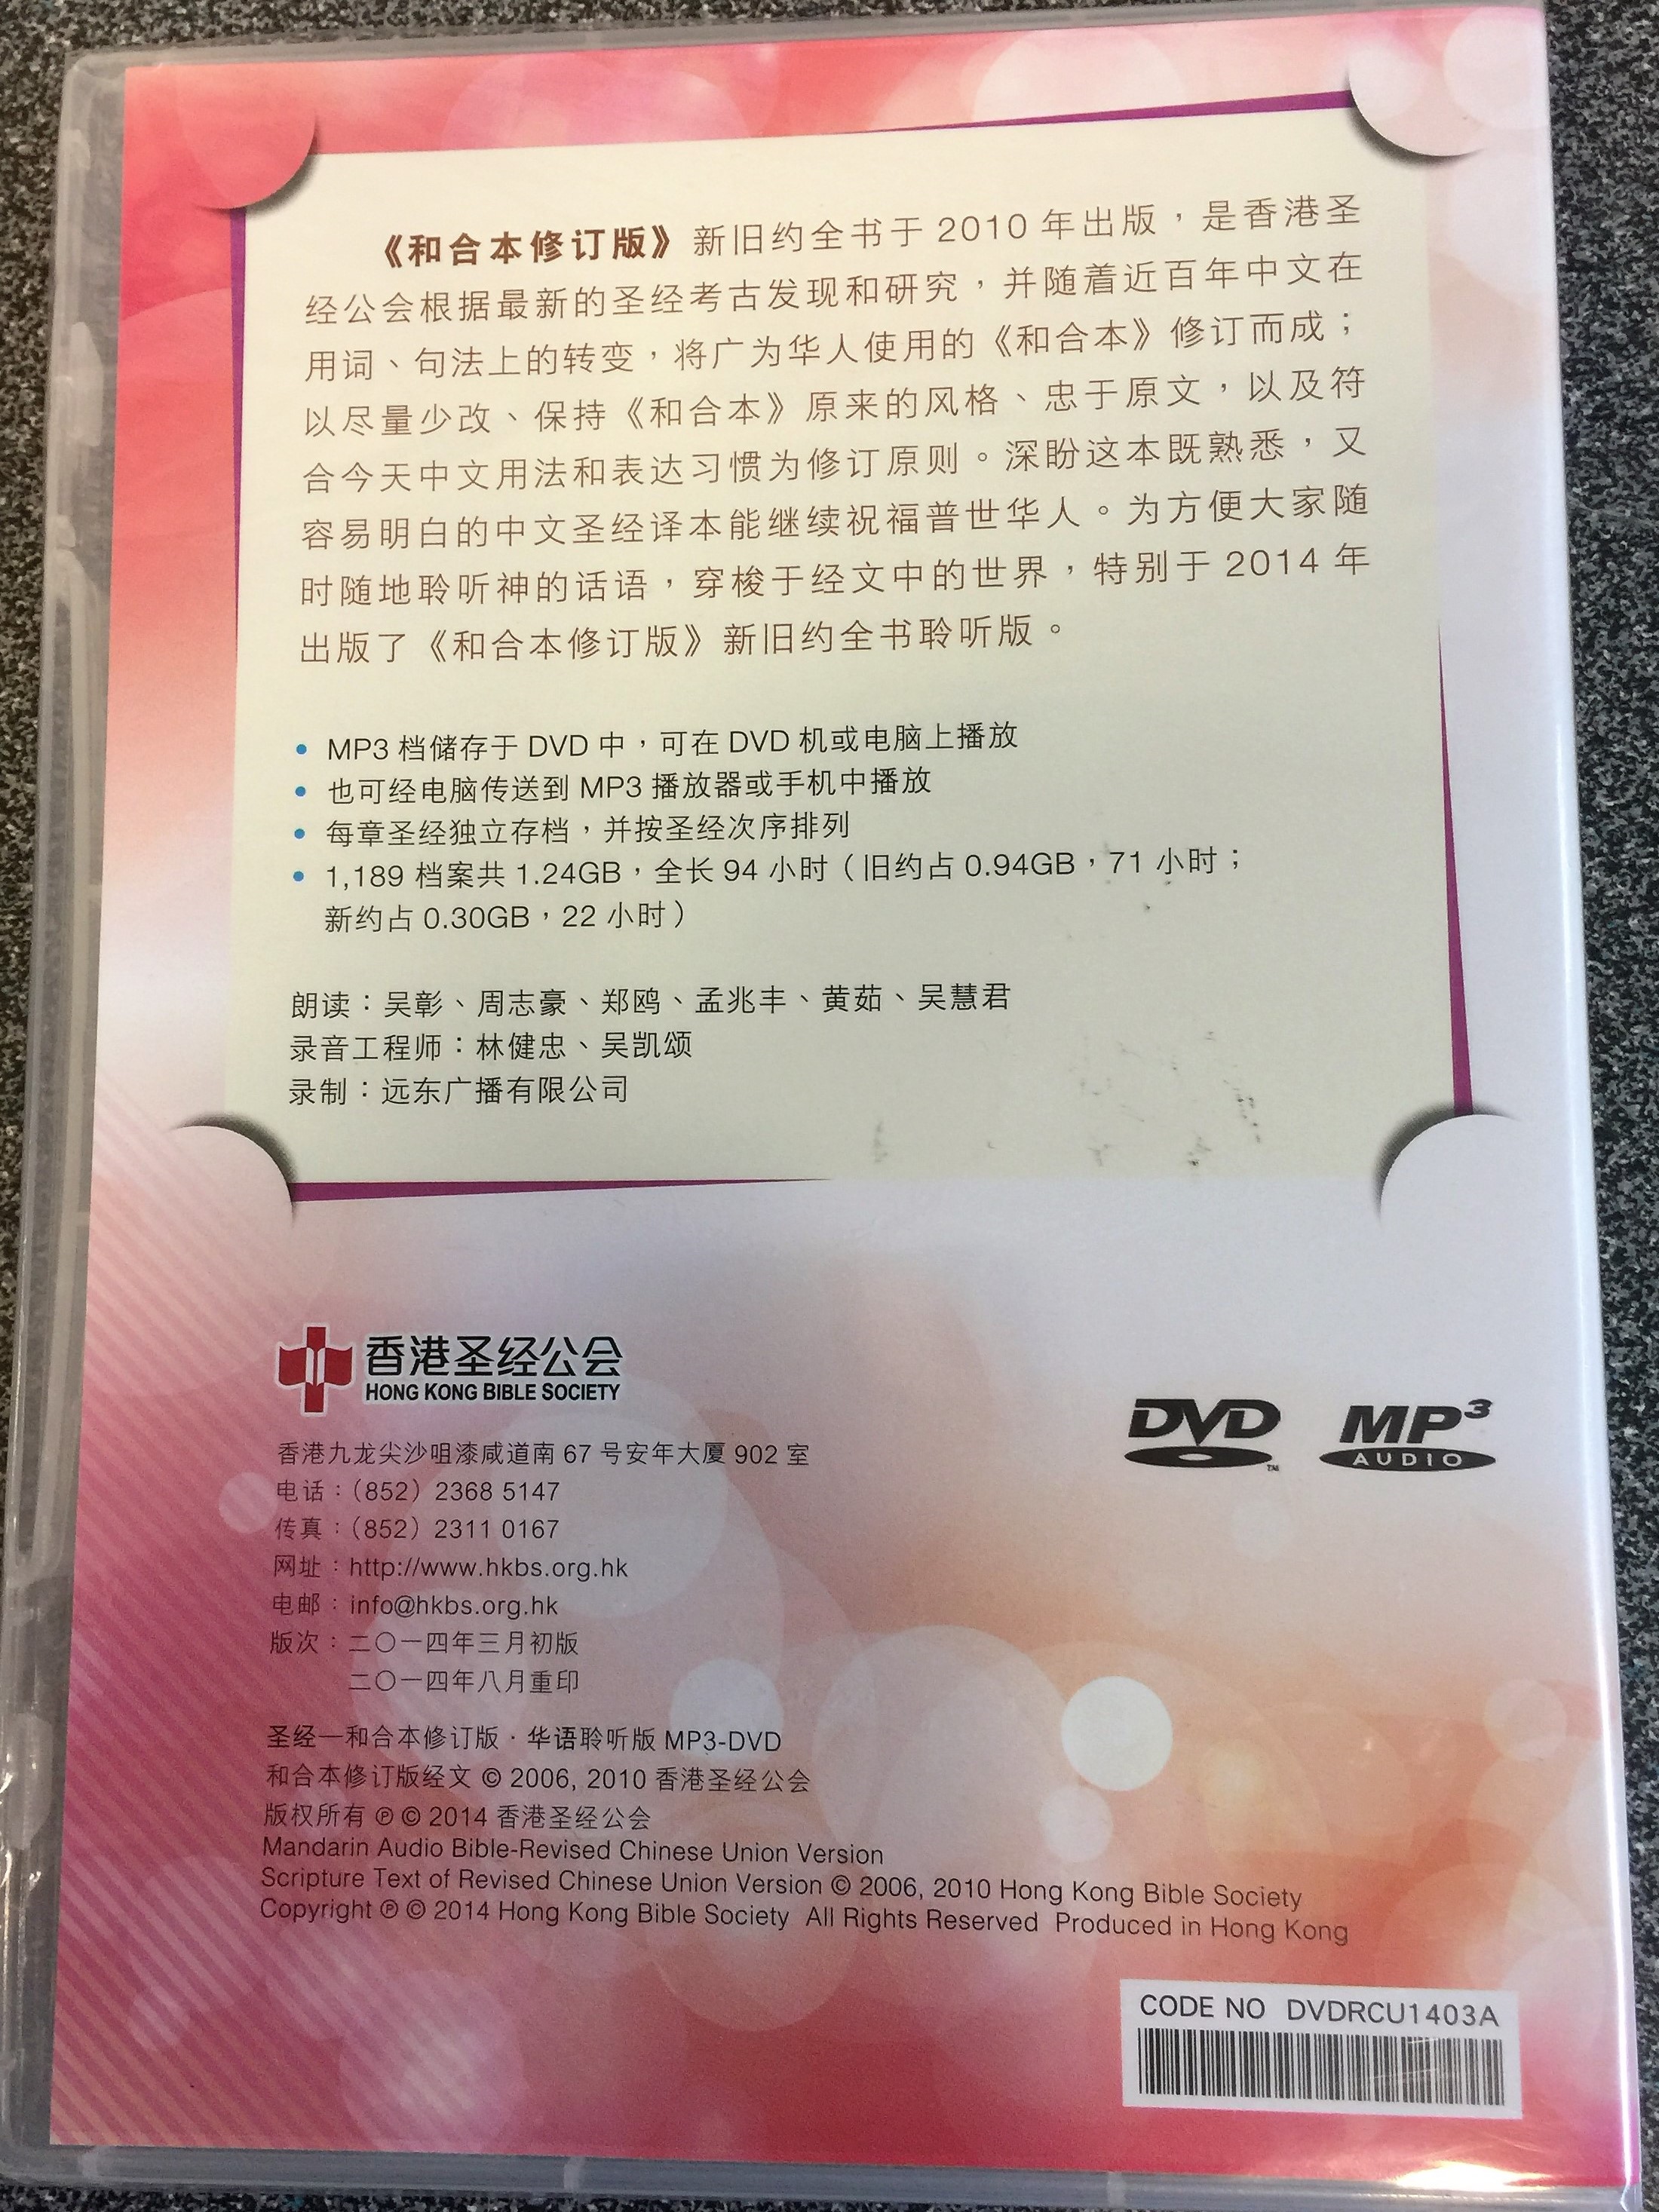 mandarin-audio-bible-revised-chinese-union-version-mp3-dvd-2014-2.jpg